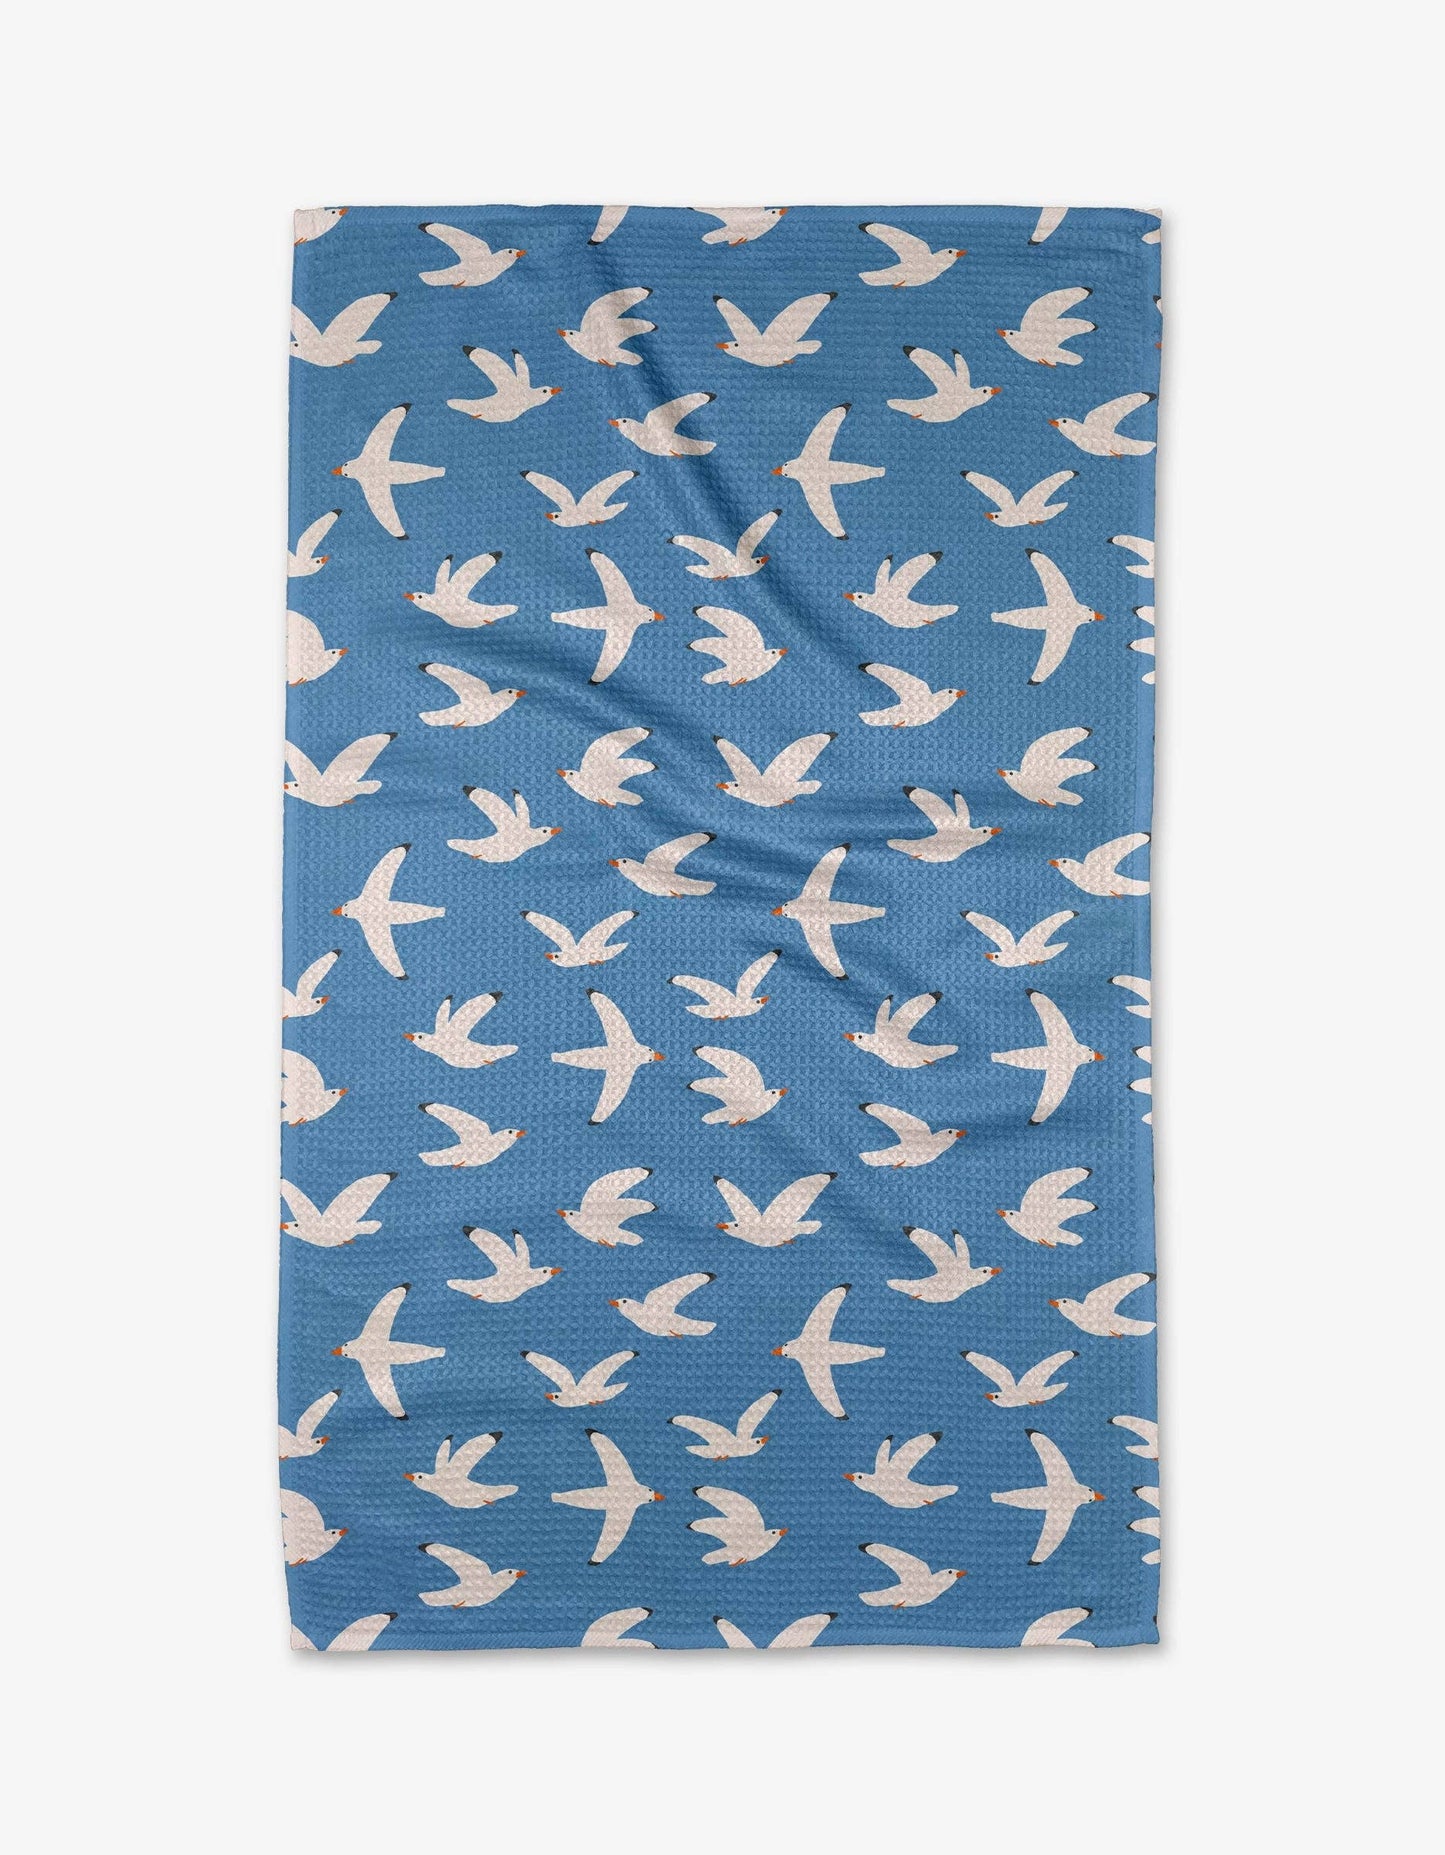 Geometry - Seagulls Tea Towel